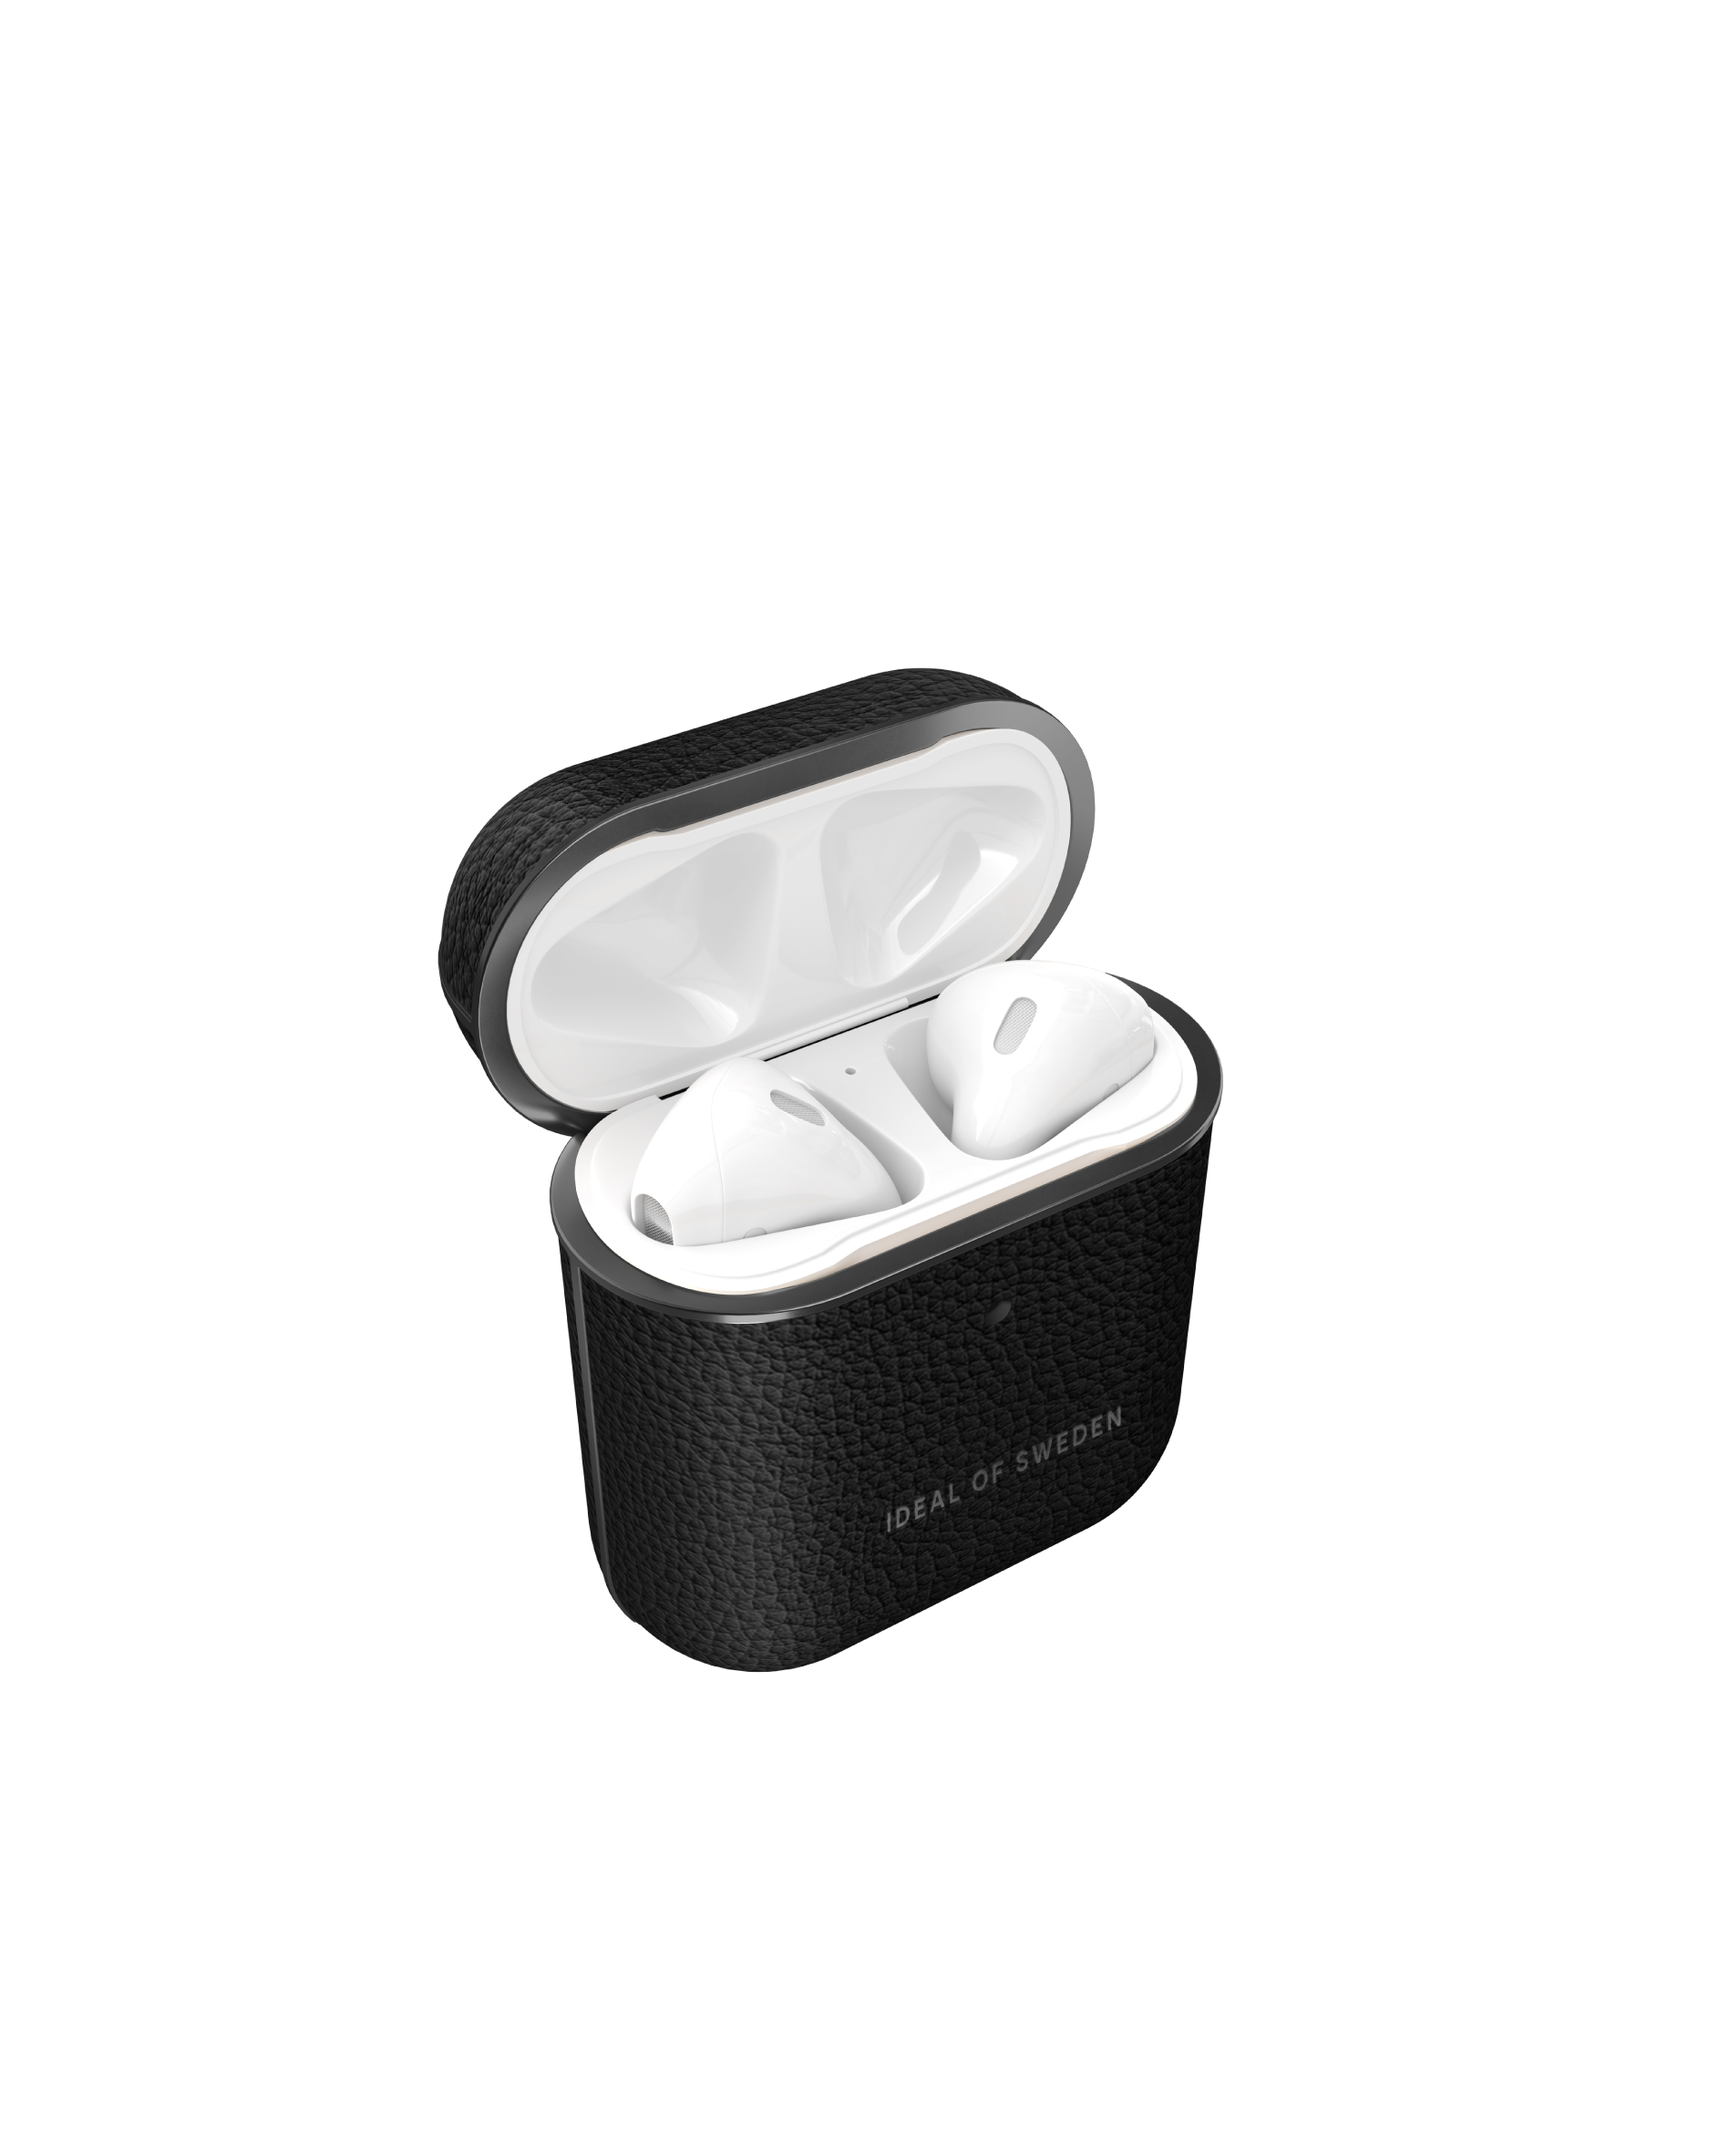 Full Onyx Khaki Case für: Cover passend SWEDEN OF AirPod Apple Black IDEAL IDAPCAW21-362